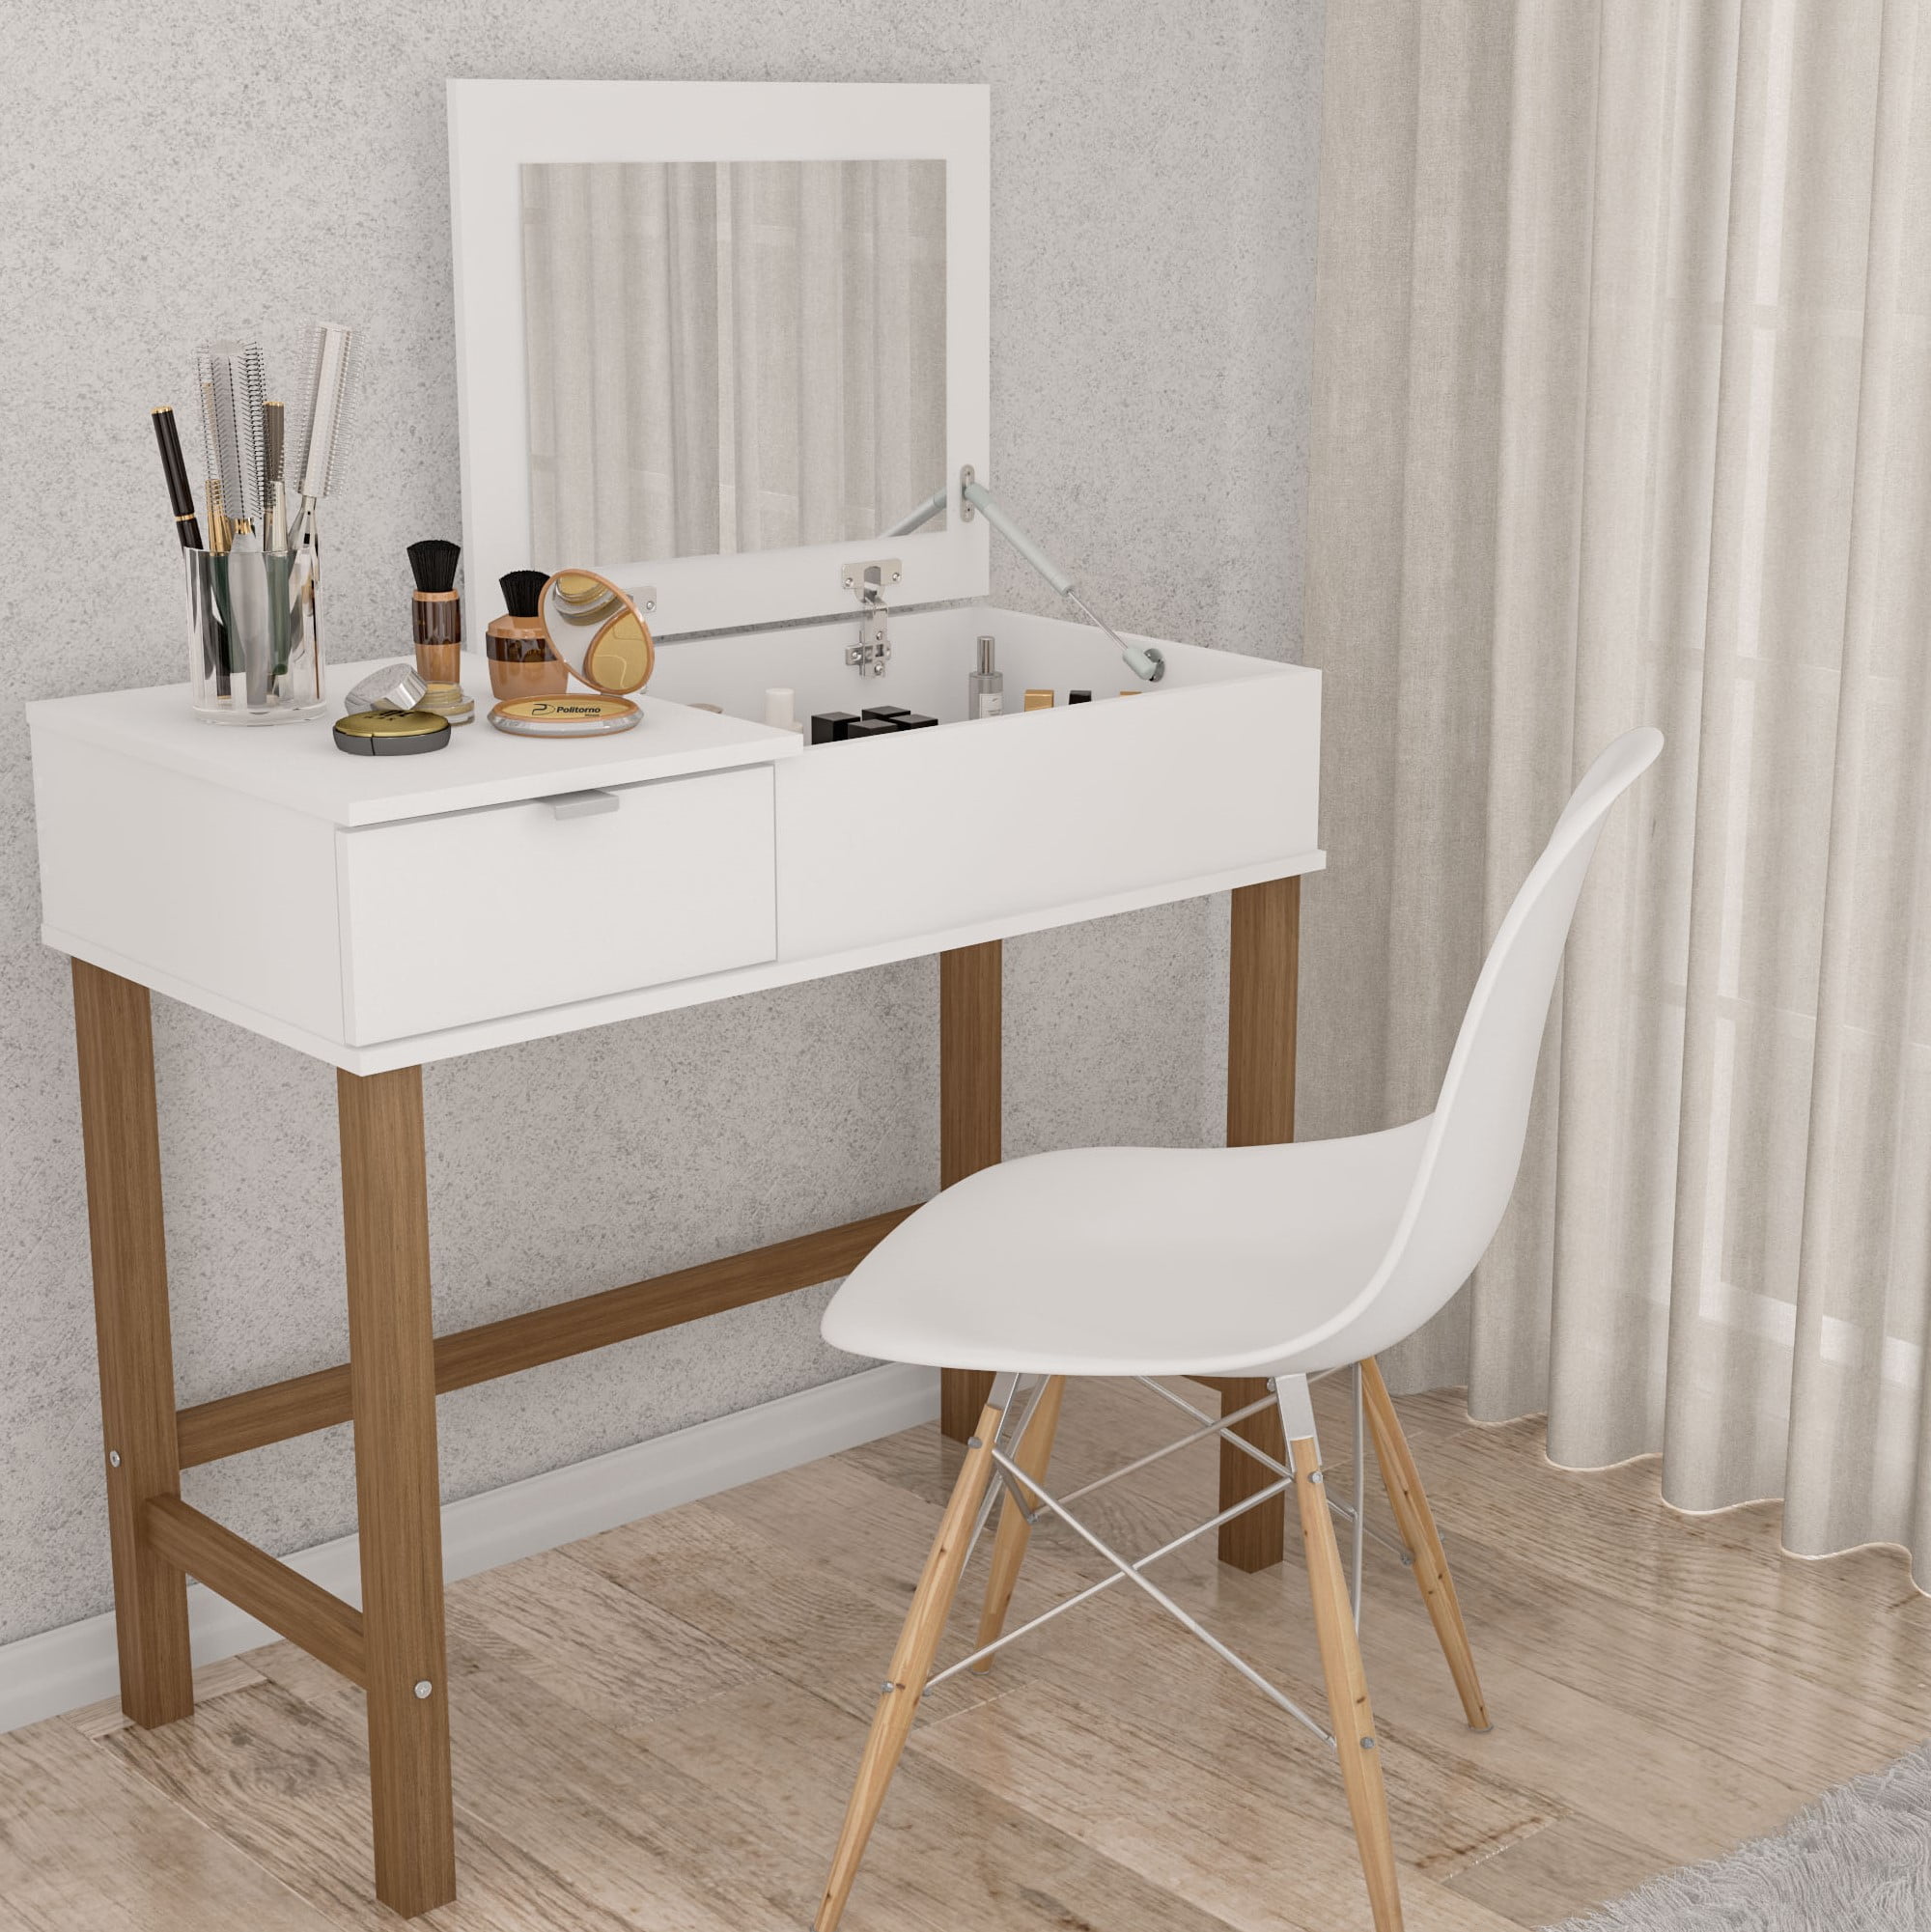 Details about   Vanity Dressing Girl Table Set Flip Mirror Desk Furniture Stool W/2 Drawer White 